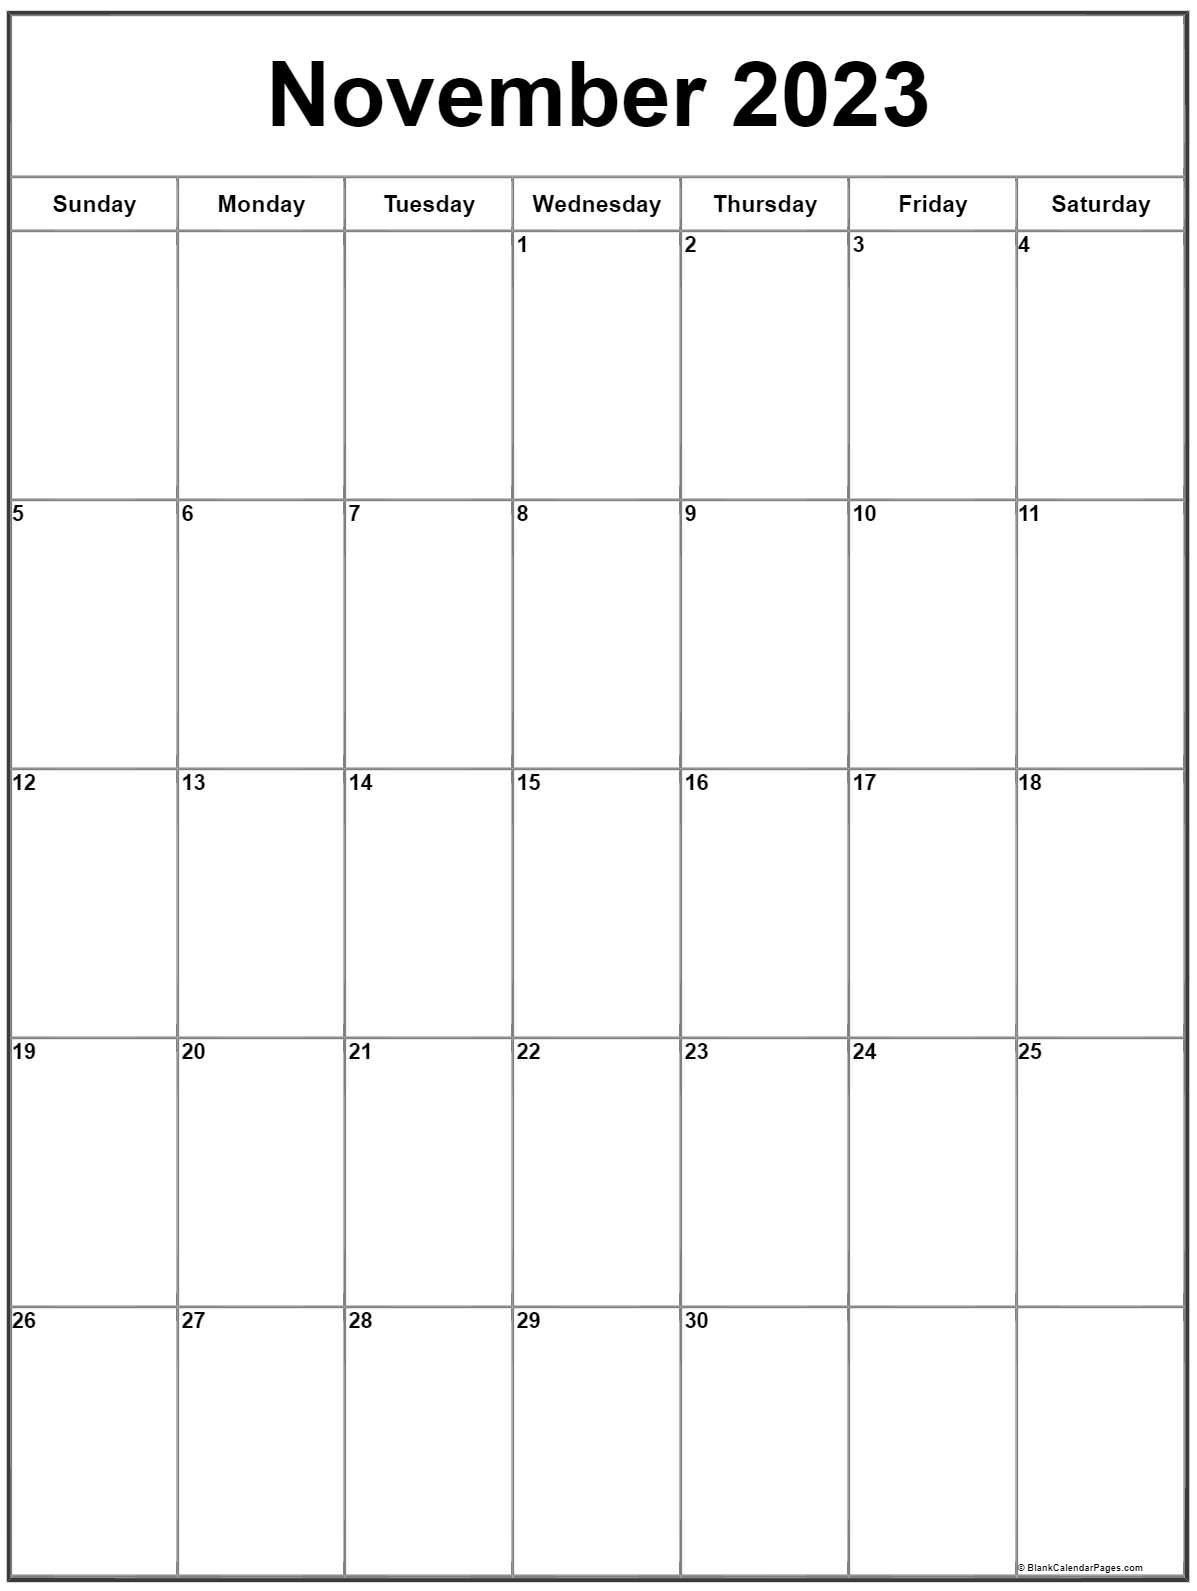 November Free Printable Calendar 2023